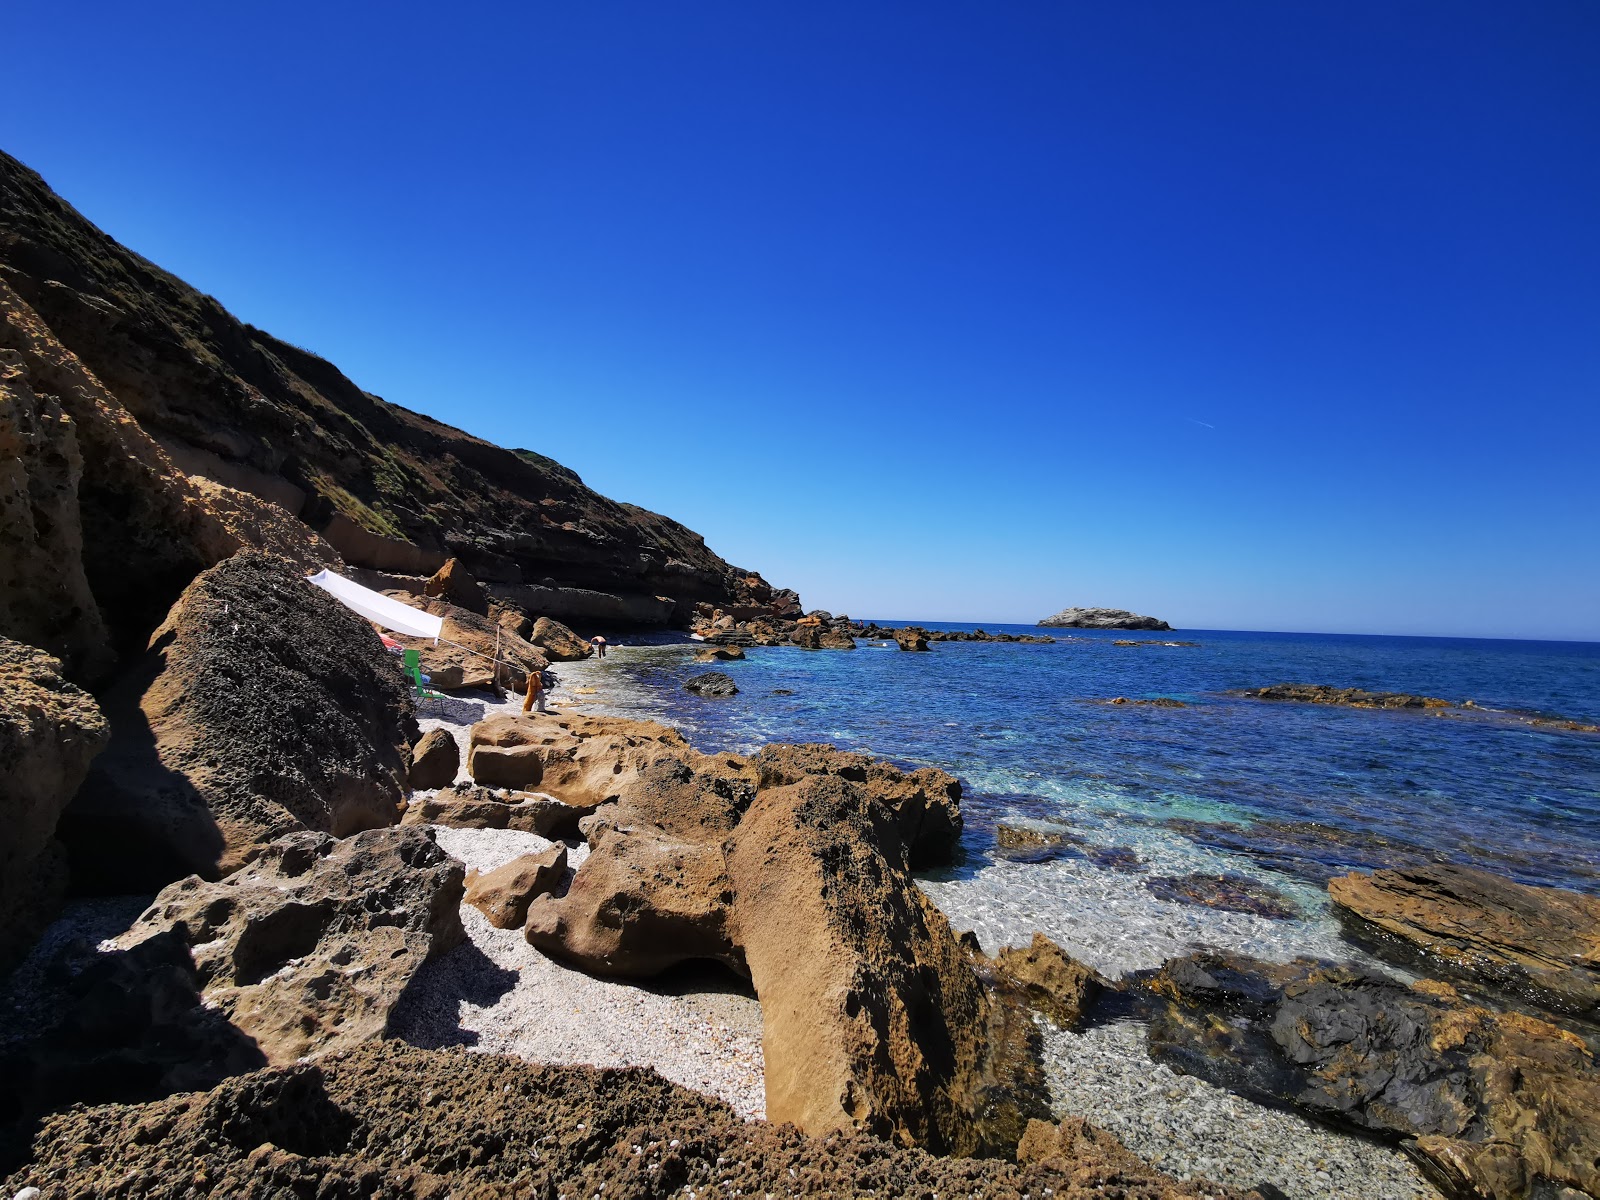 Zdjęcie Spiaggia Di Rena Majore i jego piękne krajobrazy